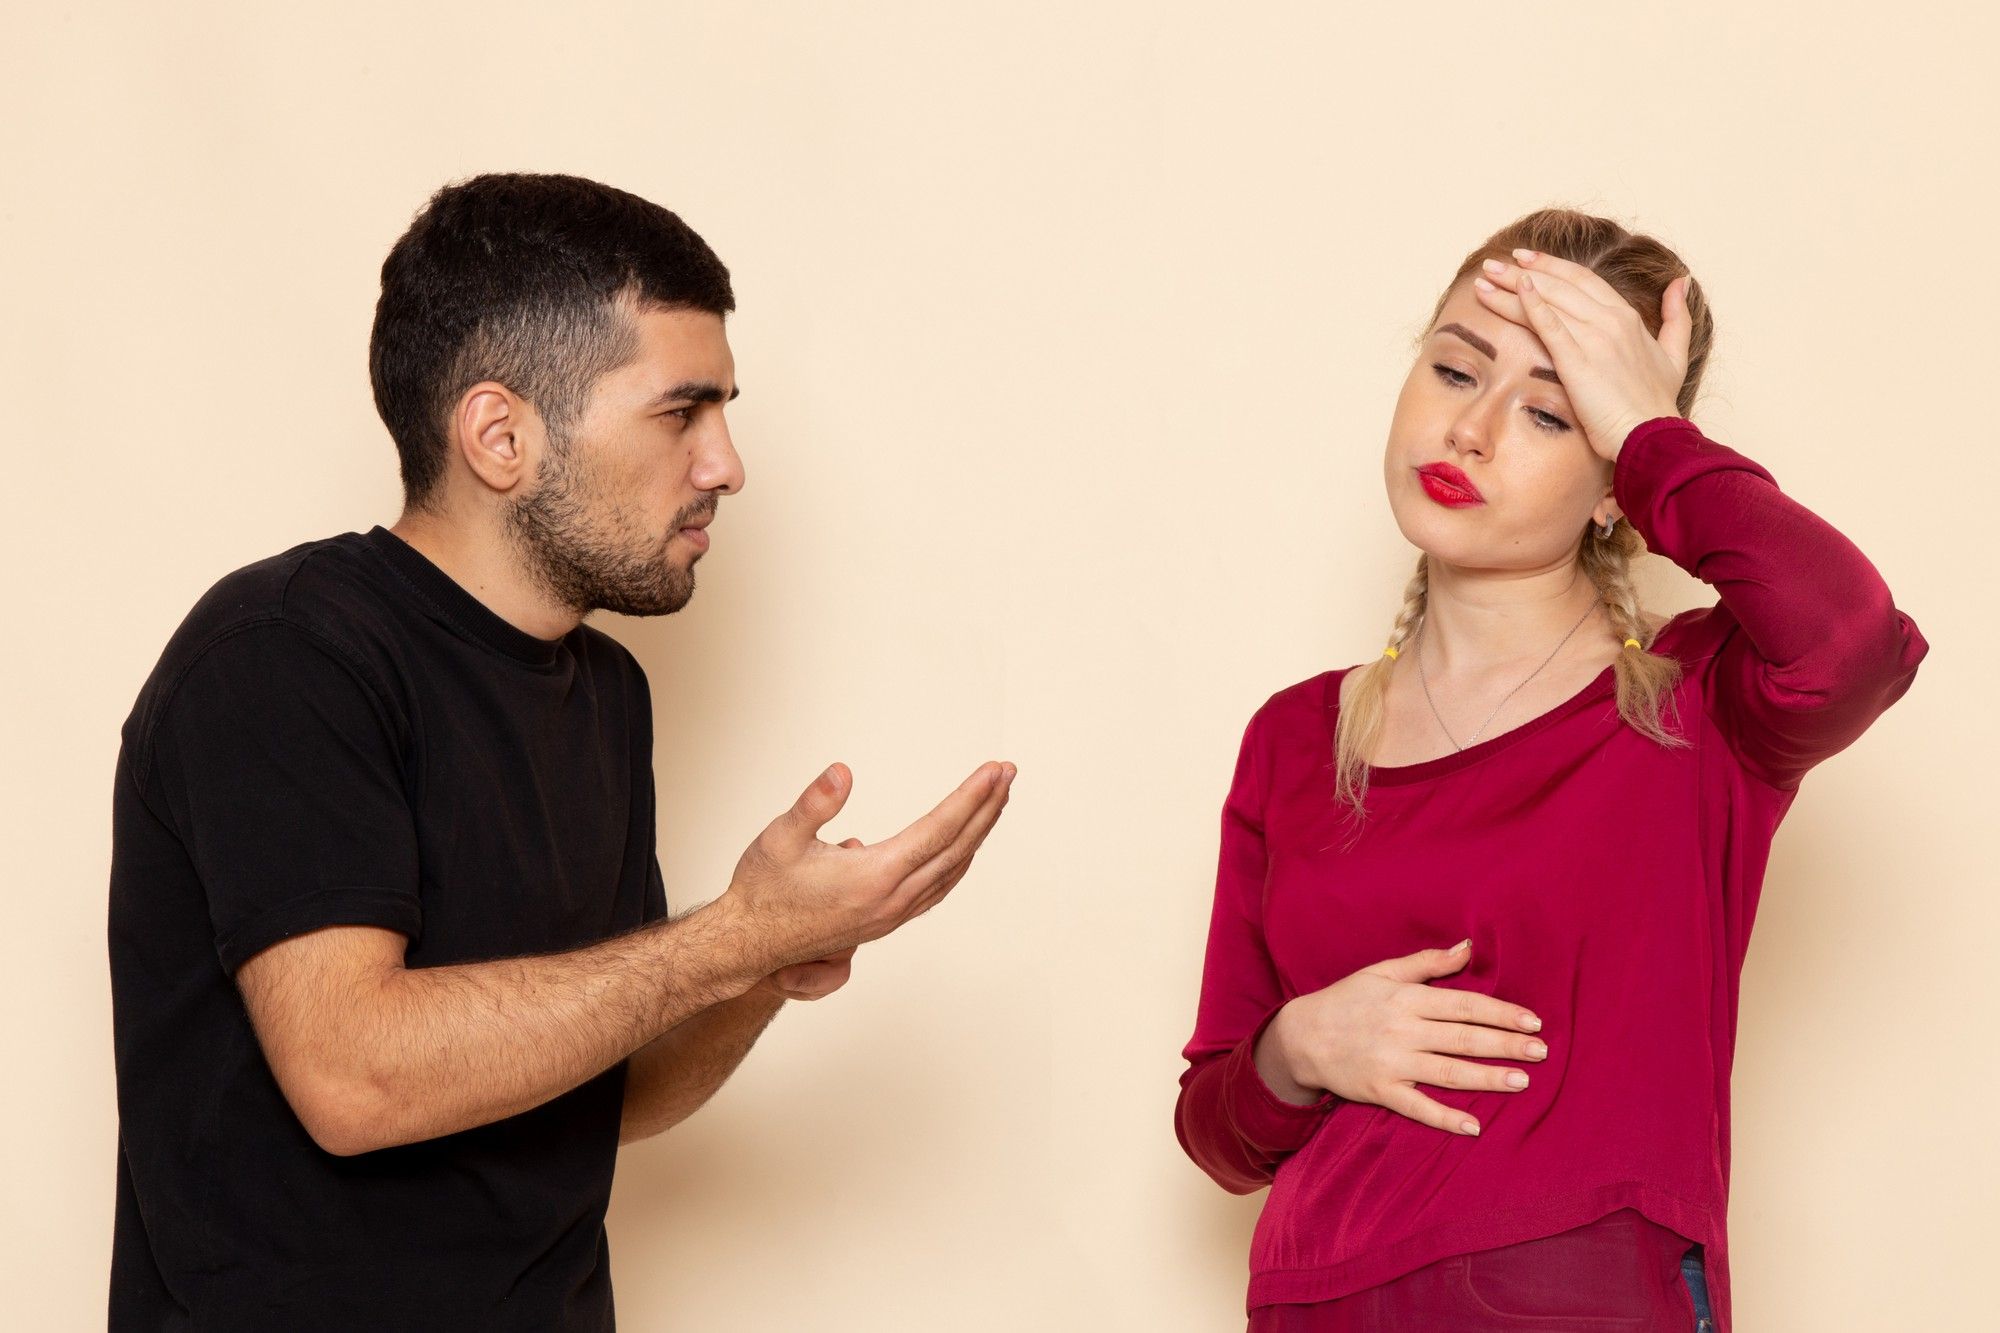 An upset man talking to a woman | Source: Freepik